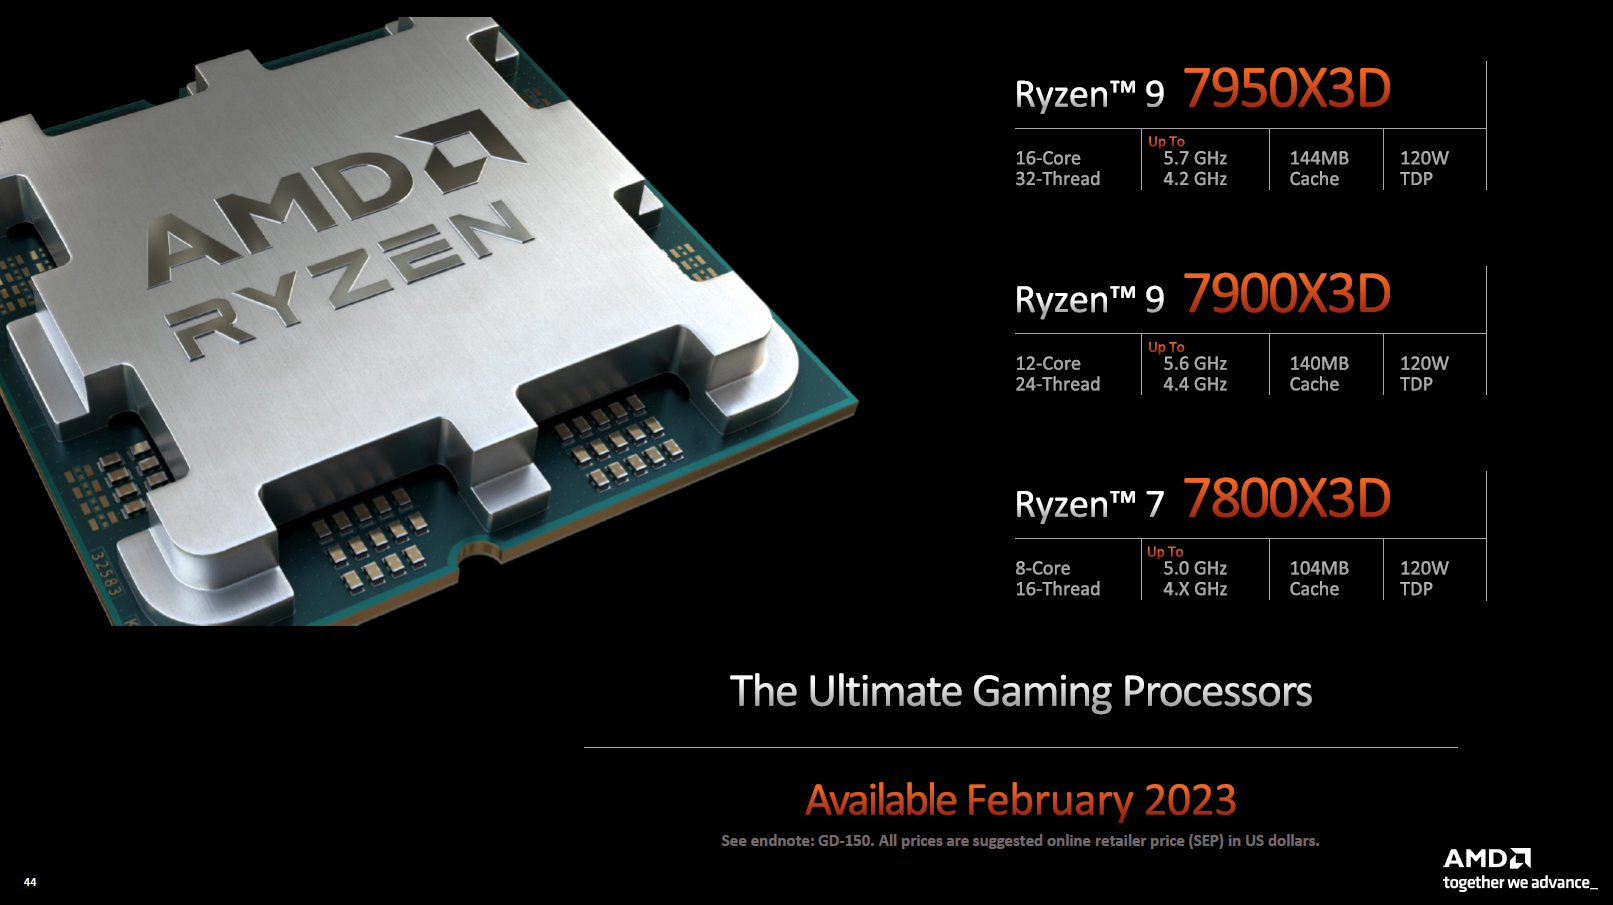 amd ryzen 7000 x3d slide final AMD RYZEN 7 7800X3D PROCESSOR REVIEW